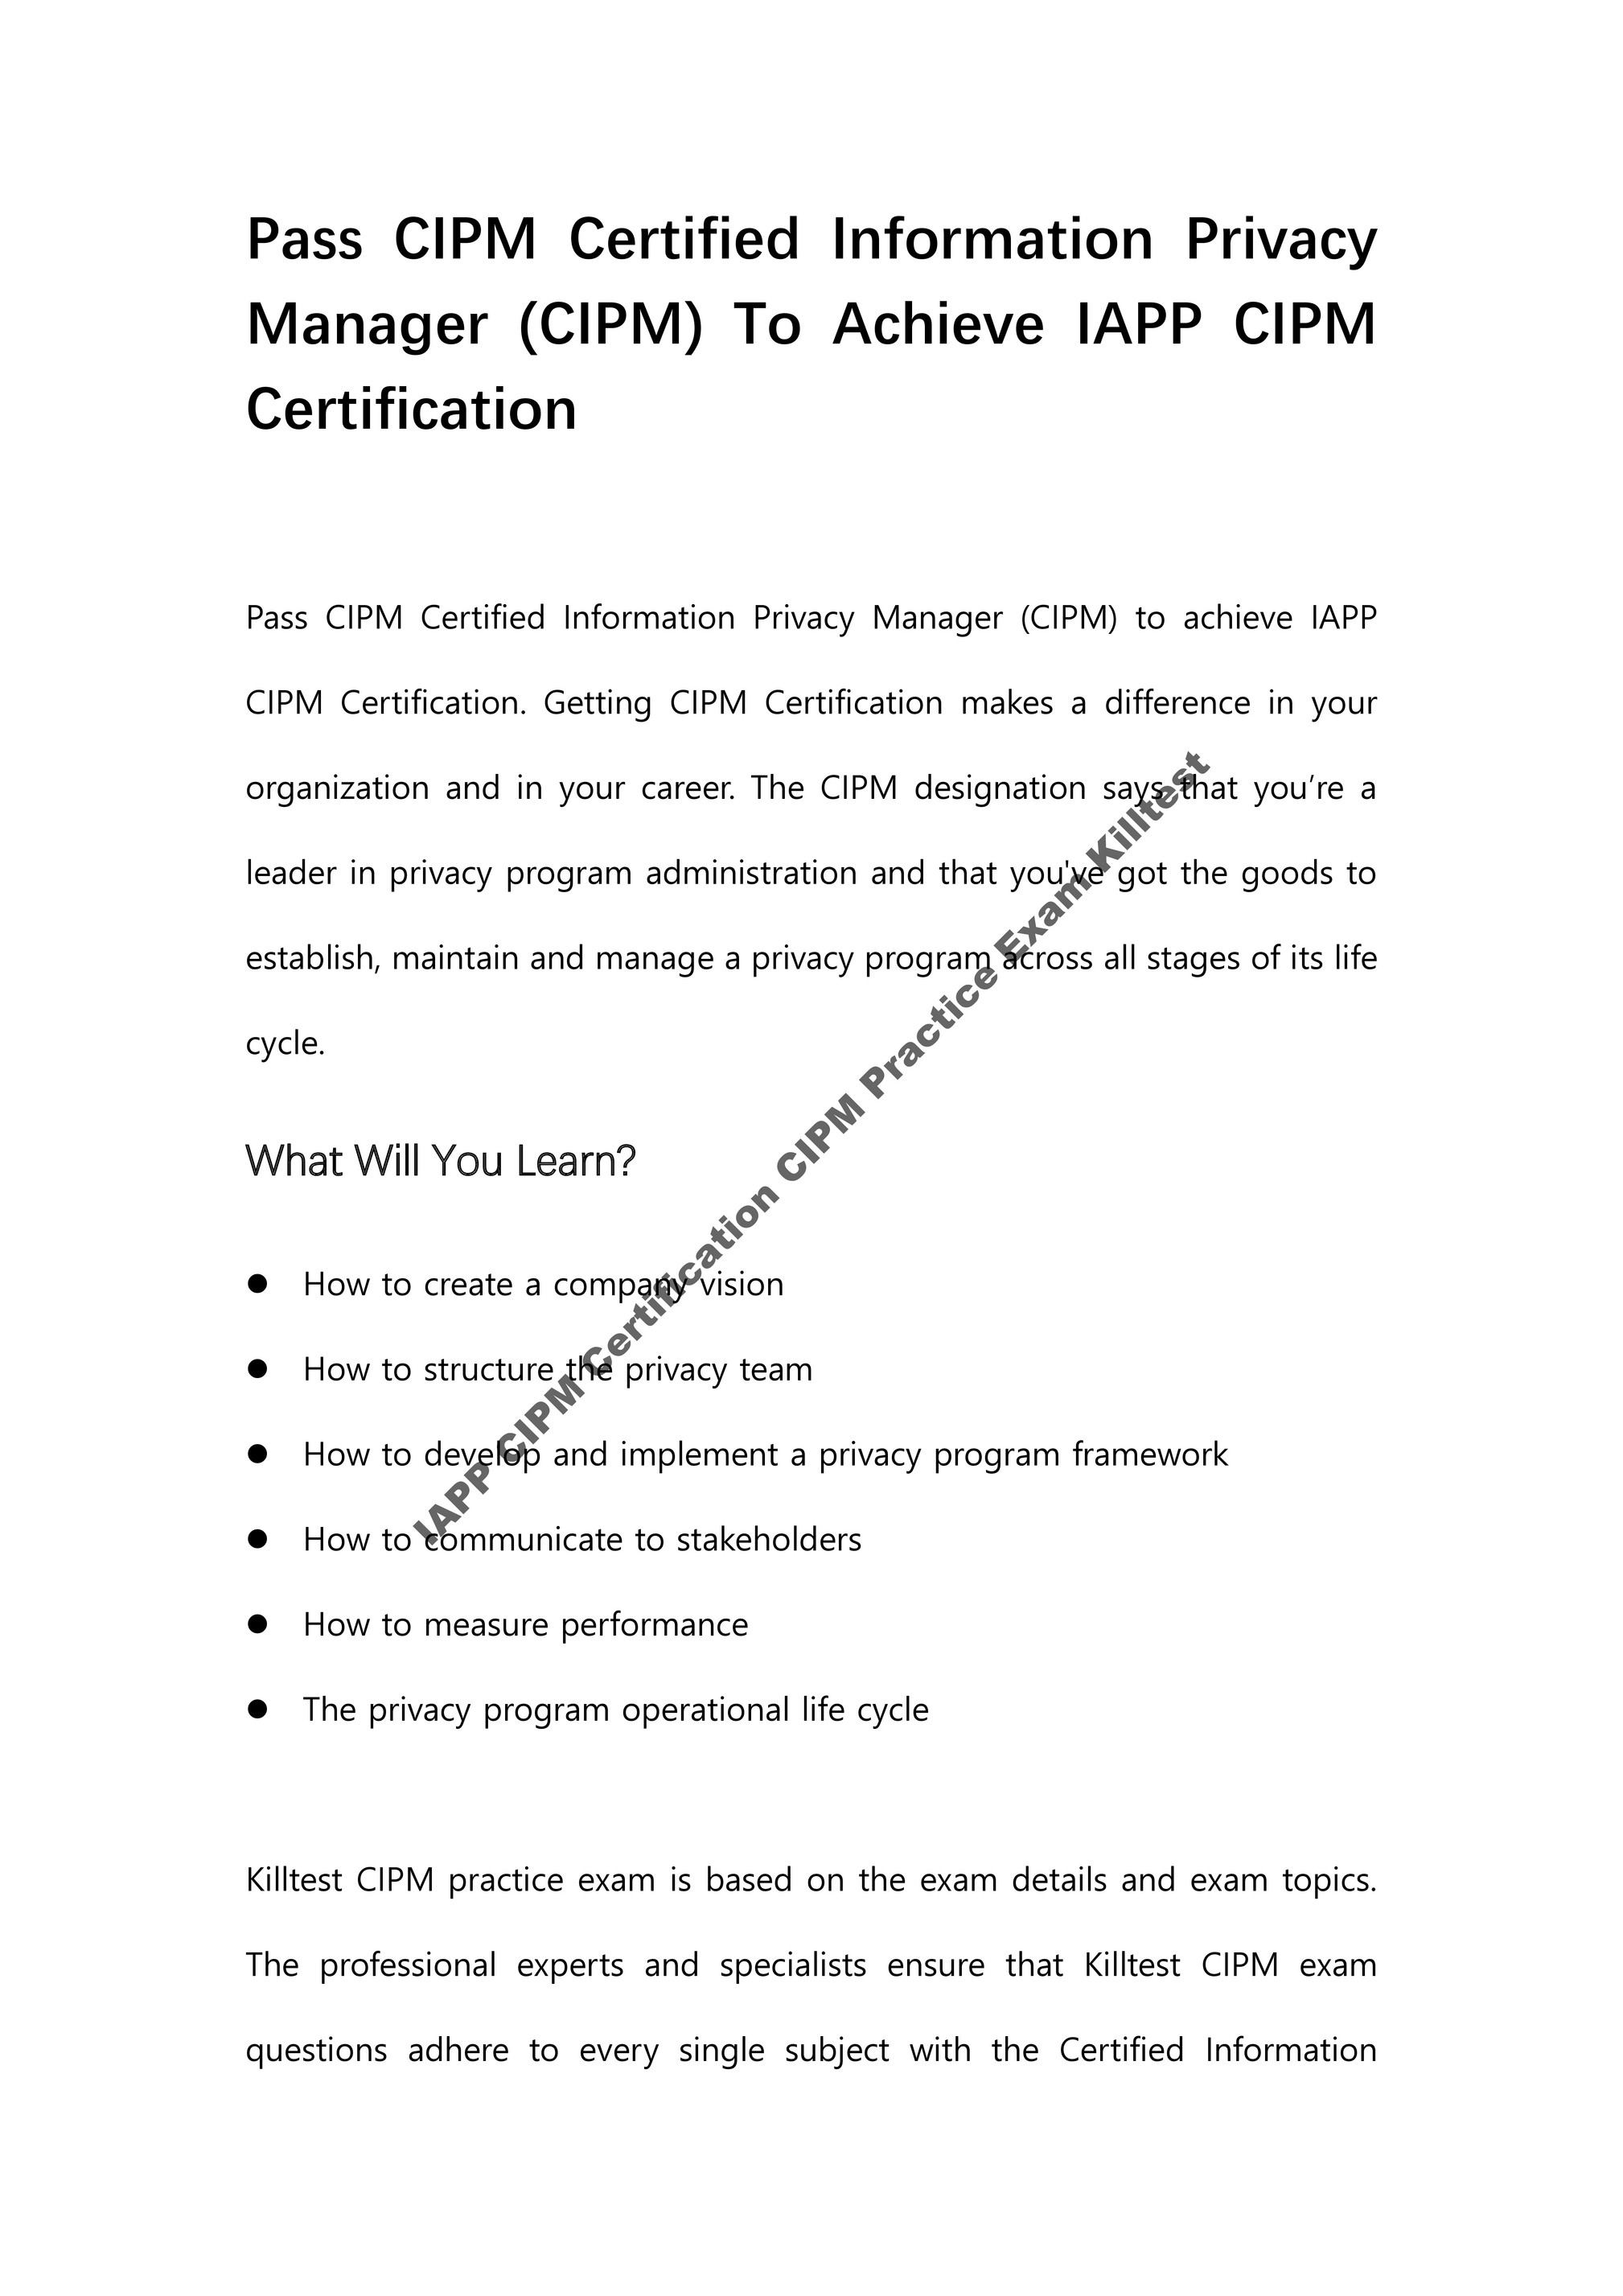 CIPM PDF Demo